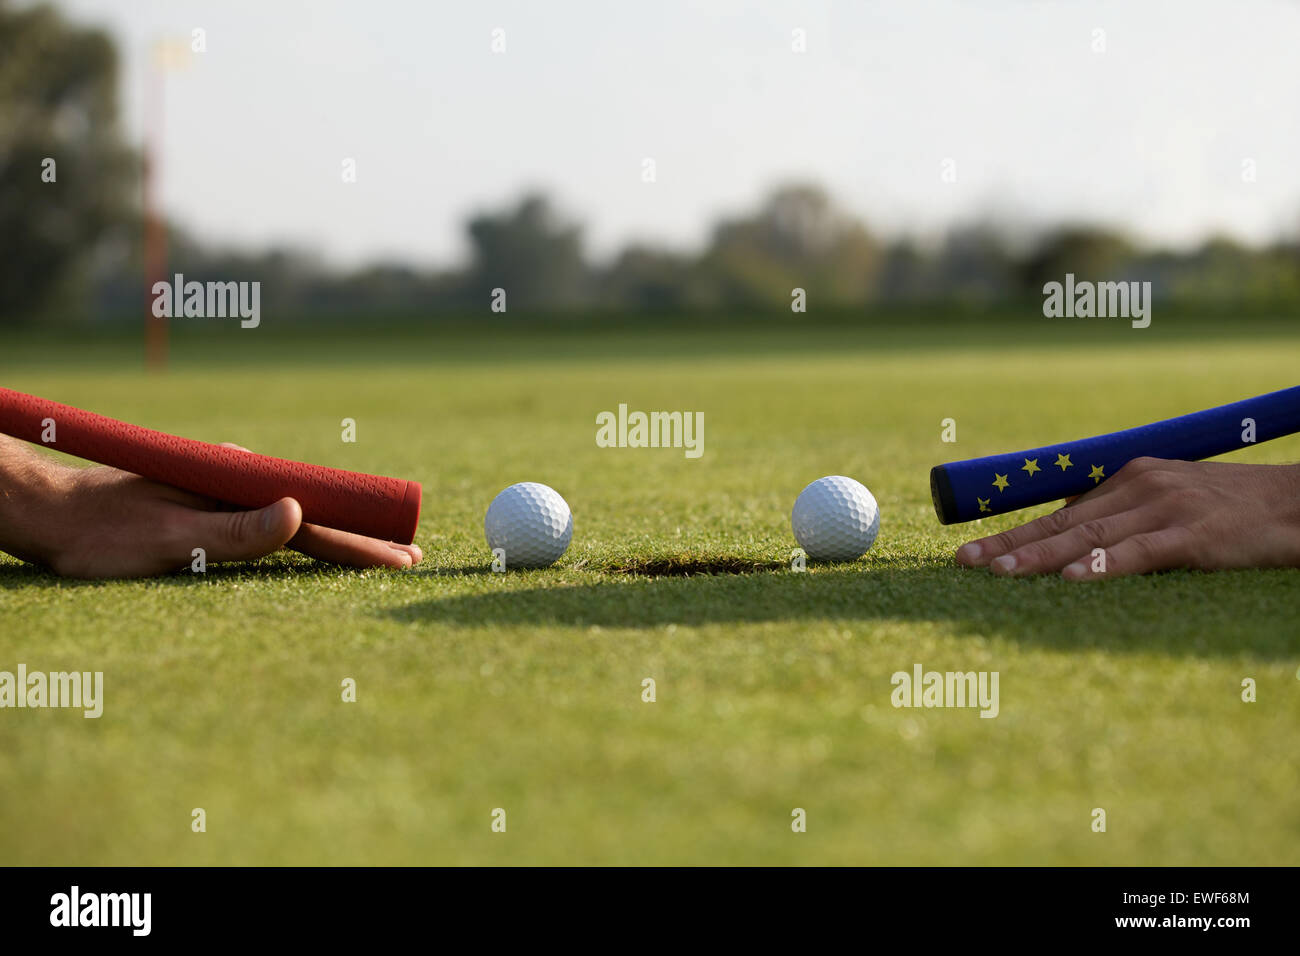 Human hands using golf balls to play pool Stock Photo